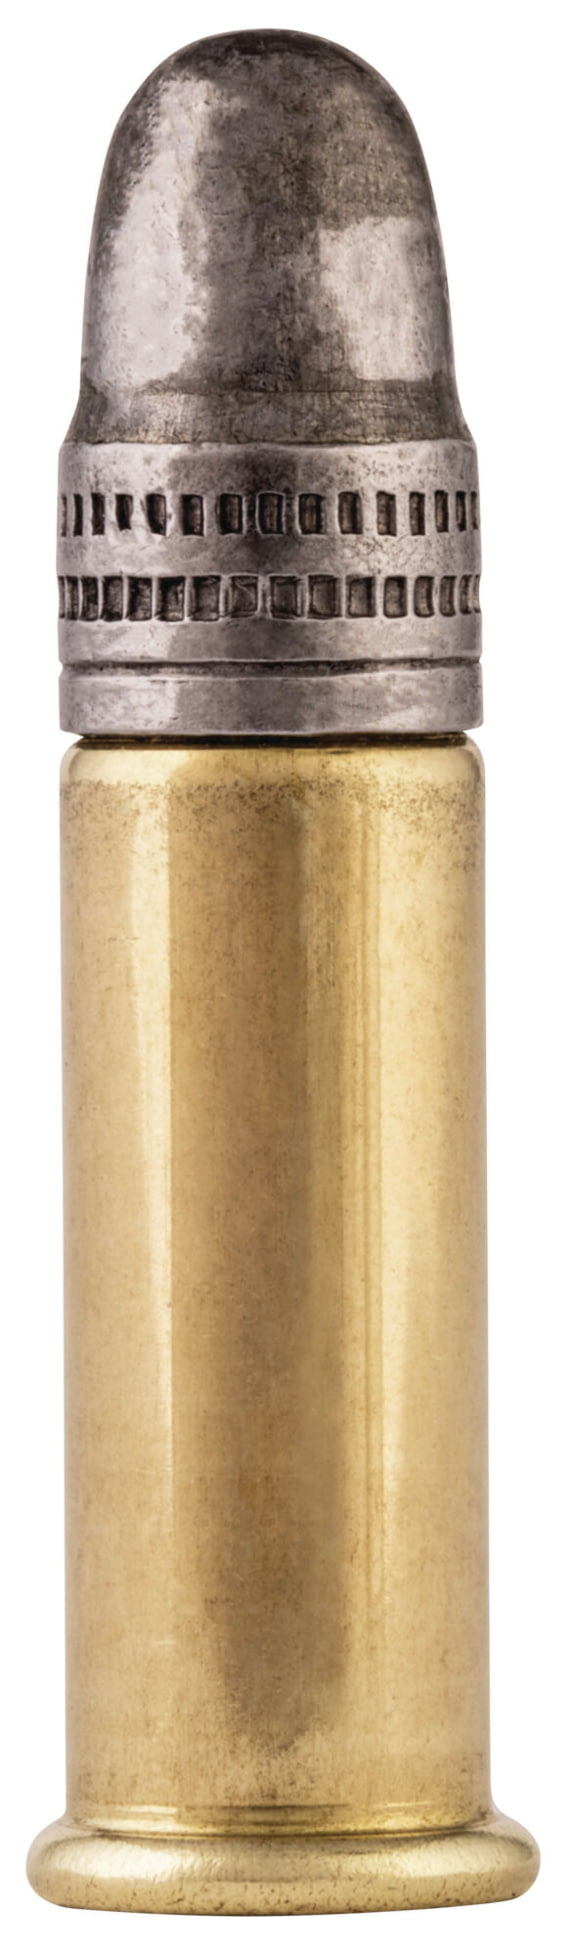 Federal Premium Gold Medal Rimfire .22 Long Rifle 40 grain Lead Round Nose Rimfire Ammunition